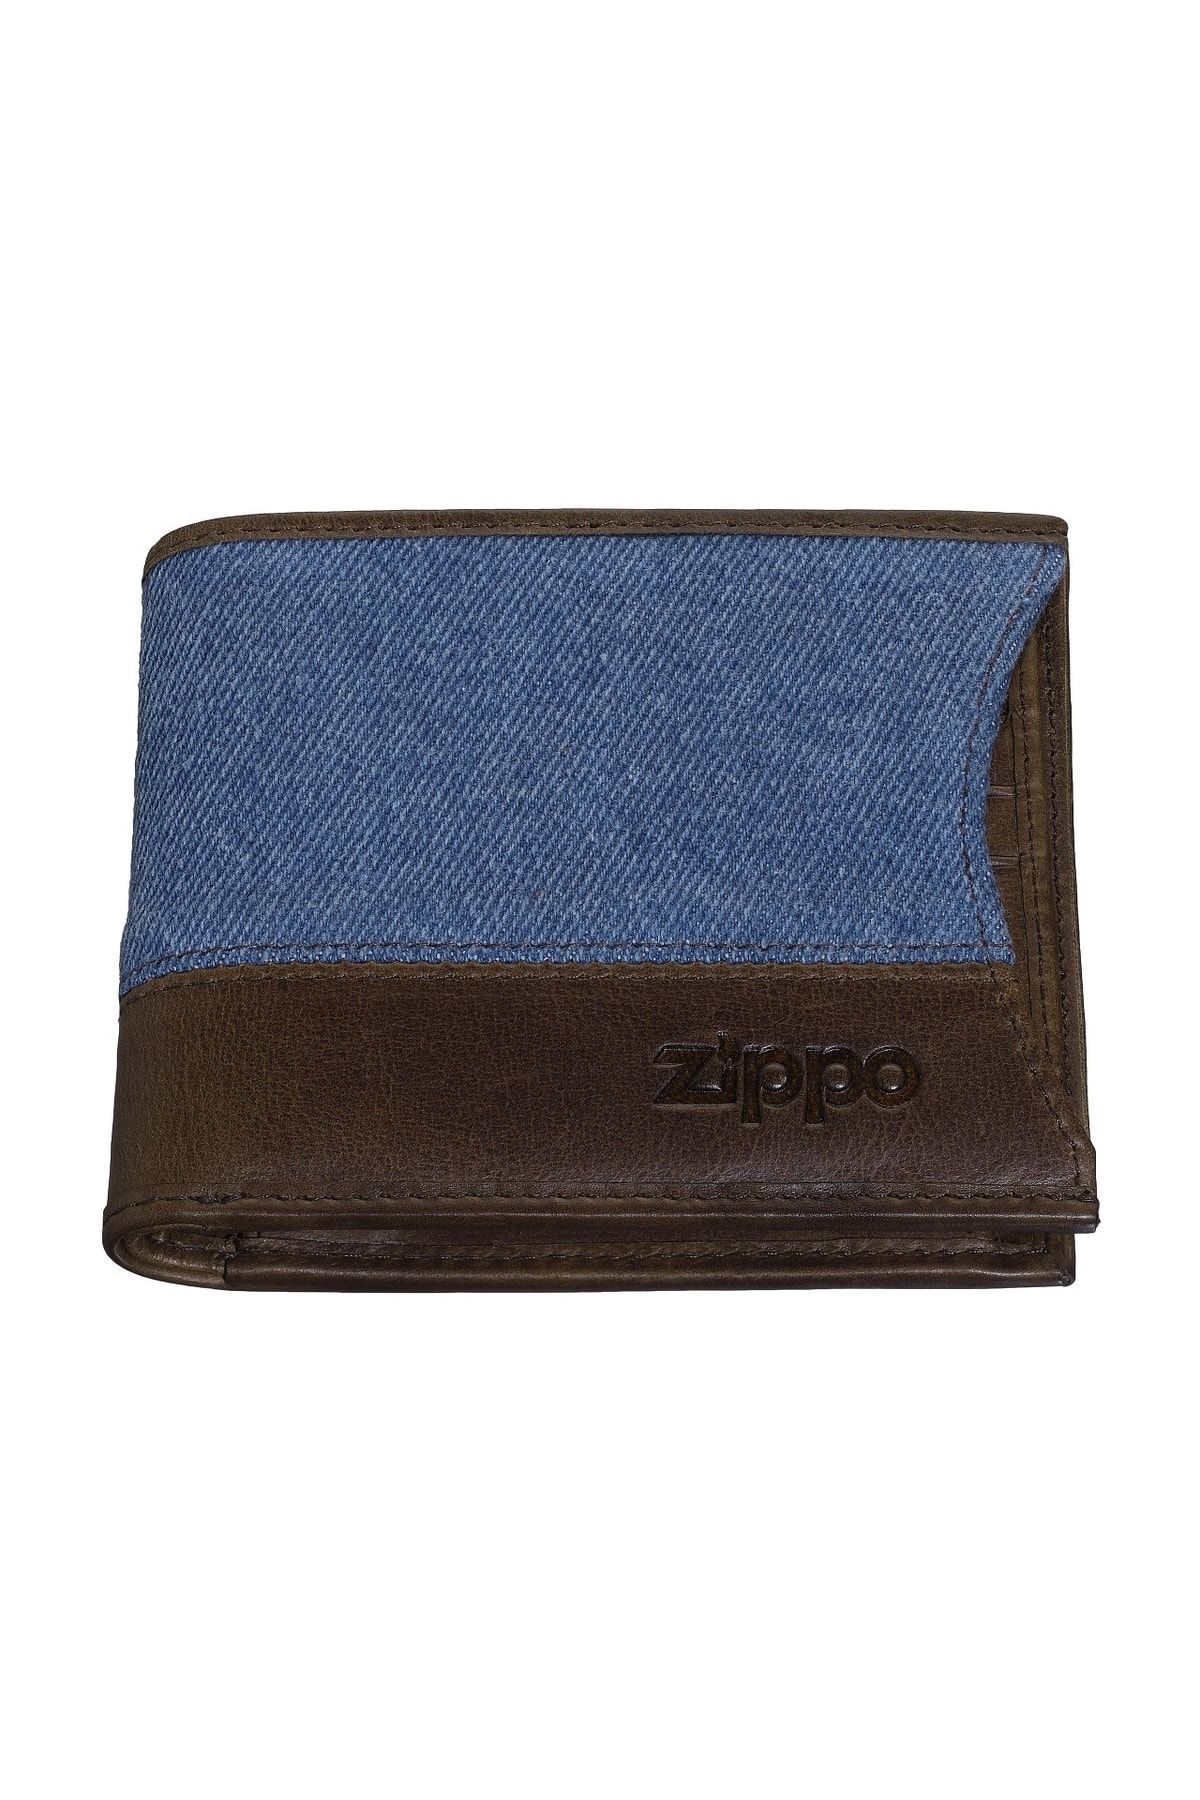 Zippo Cüzdan Mens Wallet Denim Blue Brown 2007141